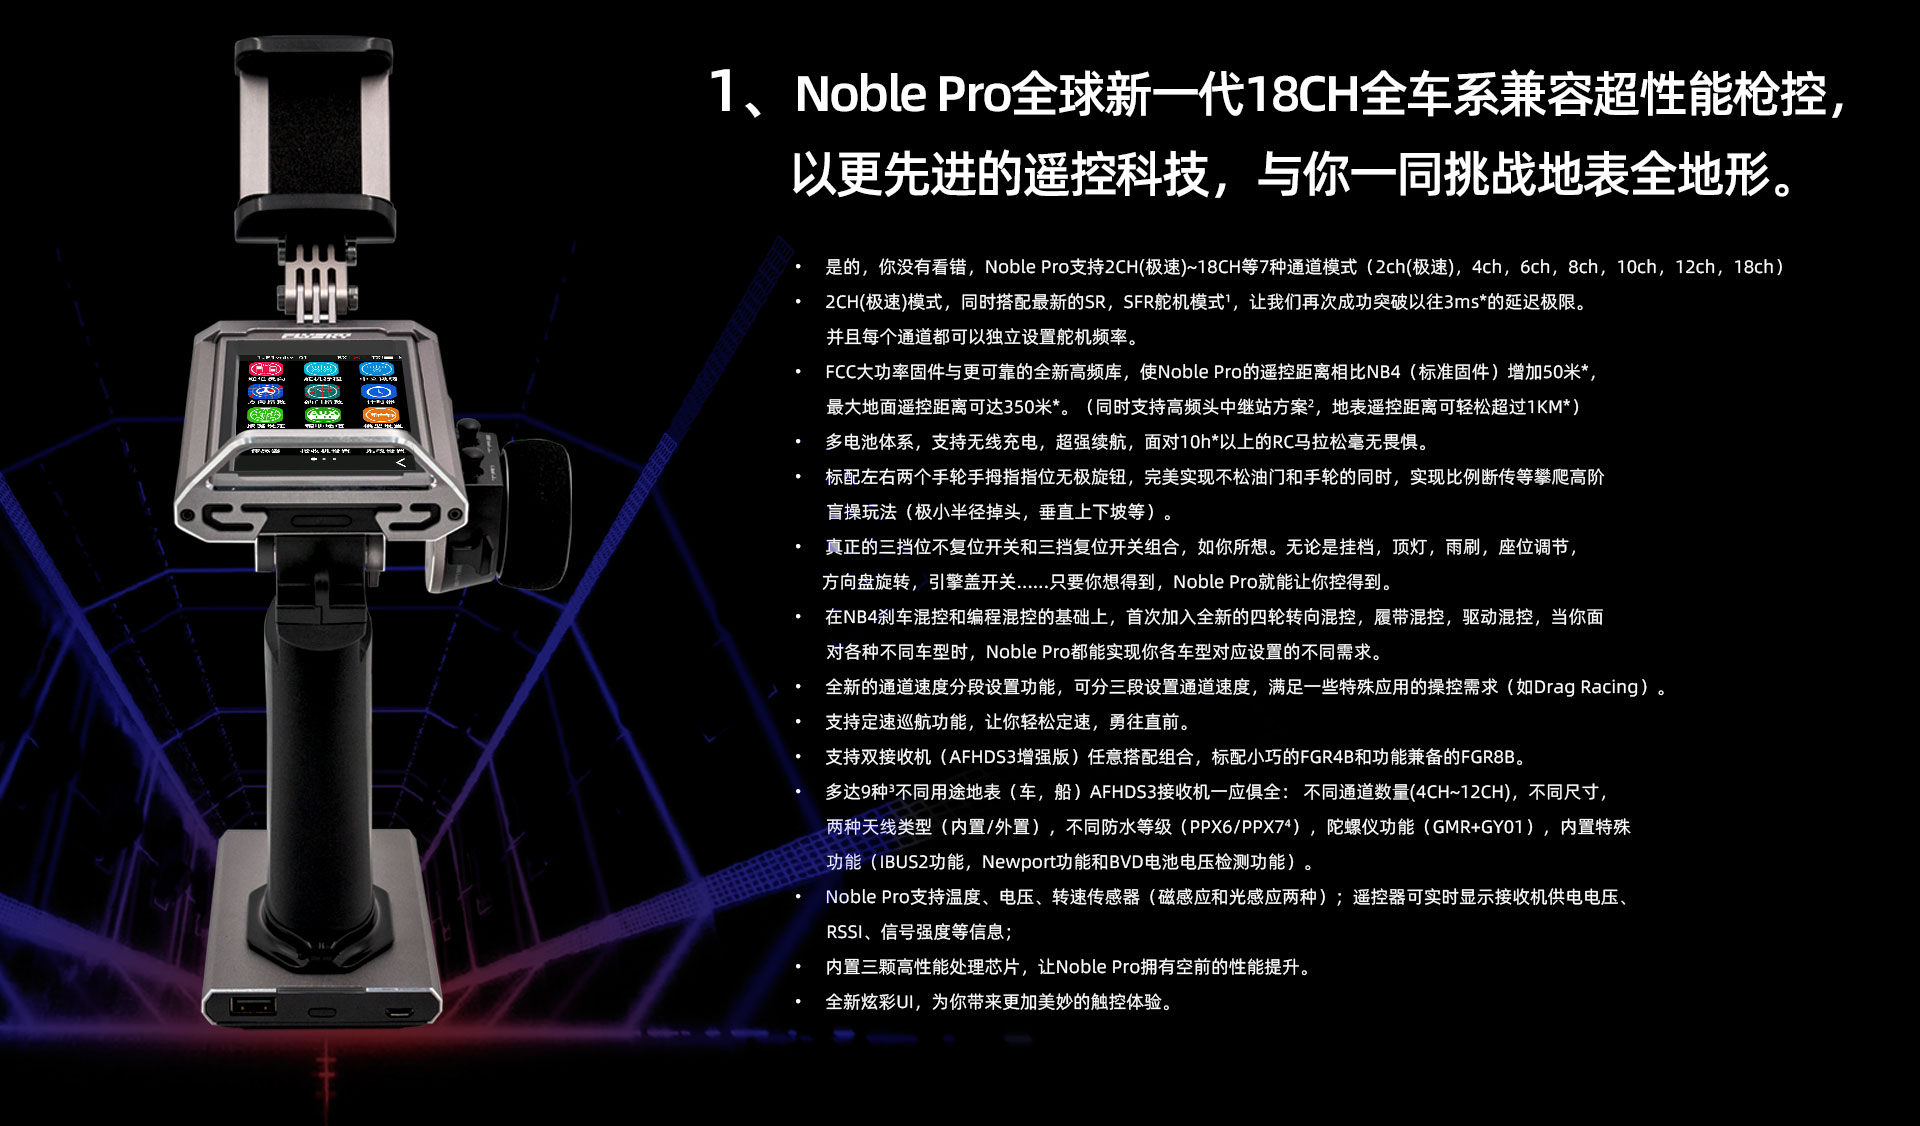 NB4 Pro